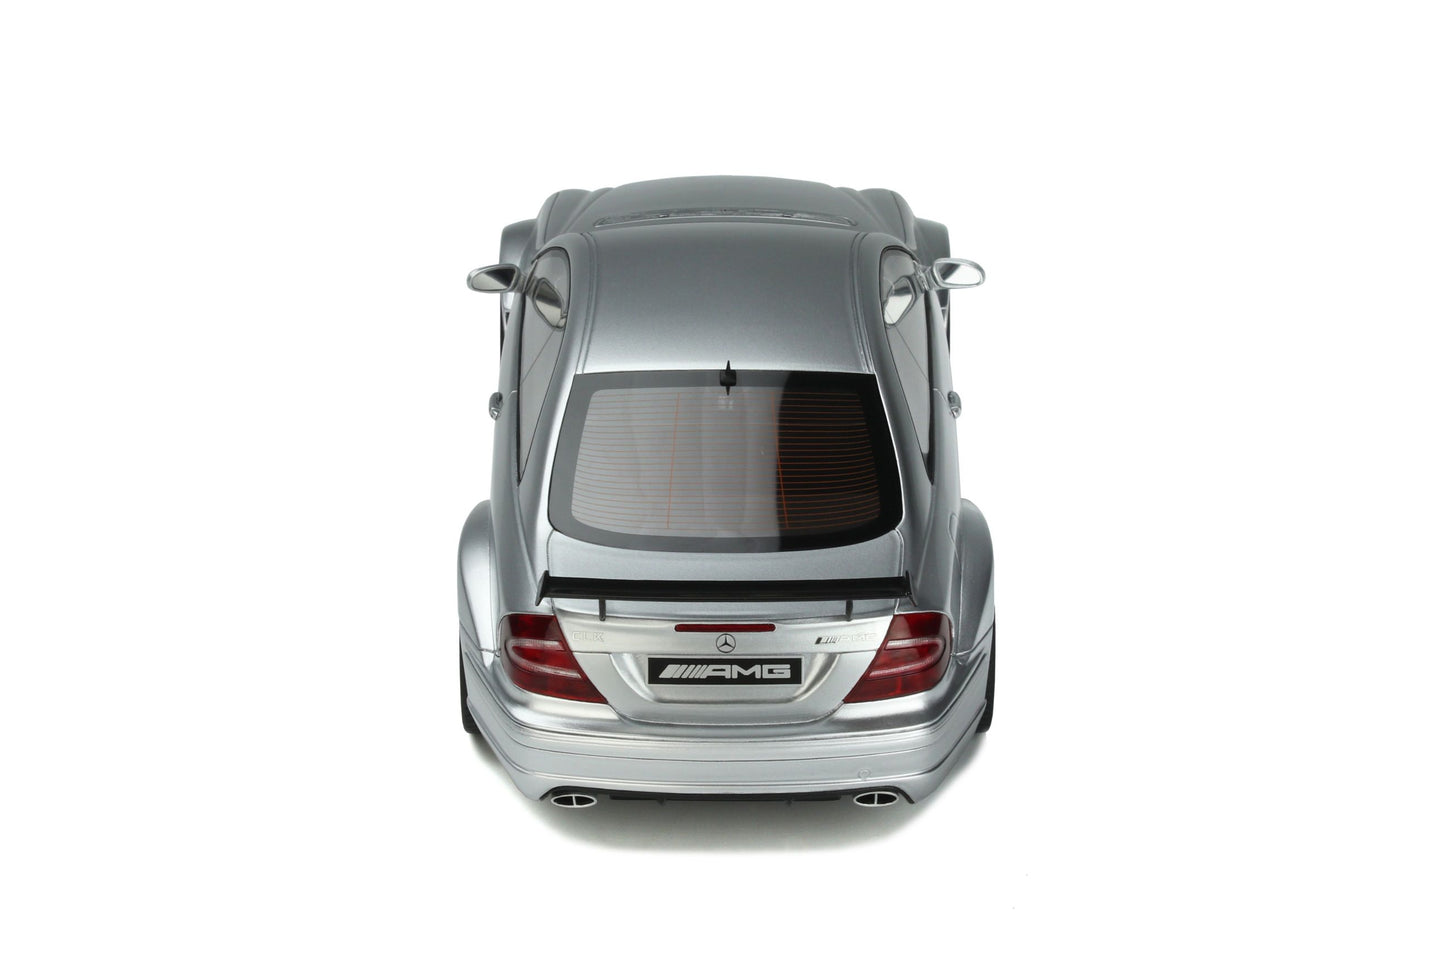 OttOmobile - Mercedes-Benz CLK DTM AMG Coupe (C209) (Brilliant Silver Metallic) 1:18 Scale Model Car